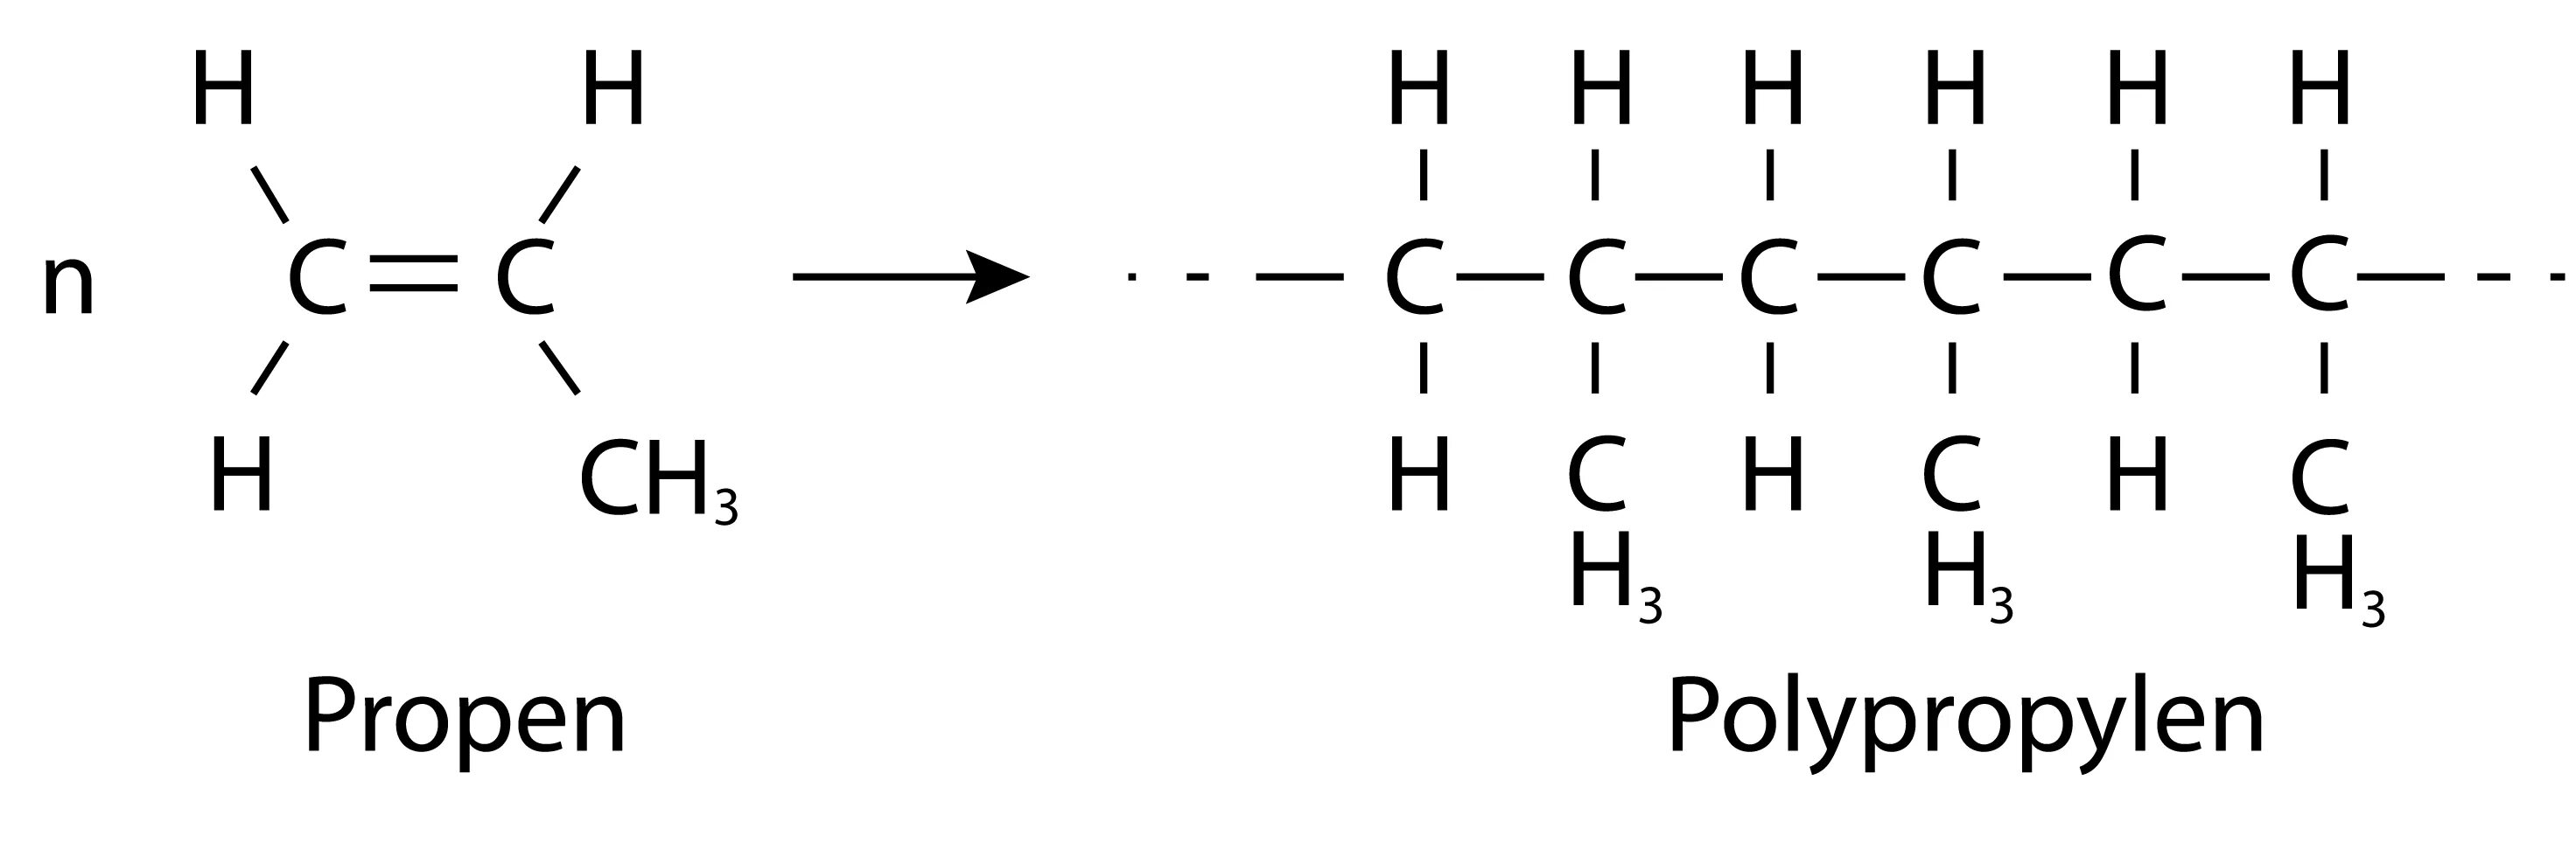 Полиэтилен структура. Полиэтилен формула полимера. Полимеры структурная формула. Строение полиэтилена в химии. Полиэтилен структурная формула.